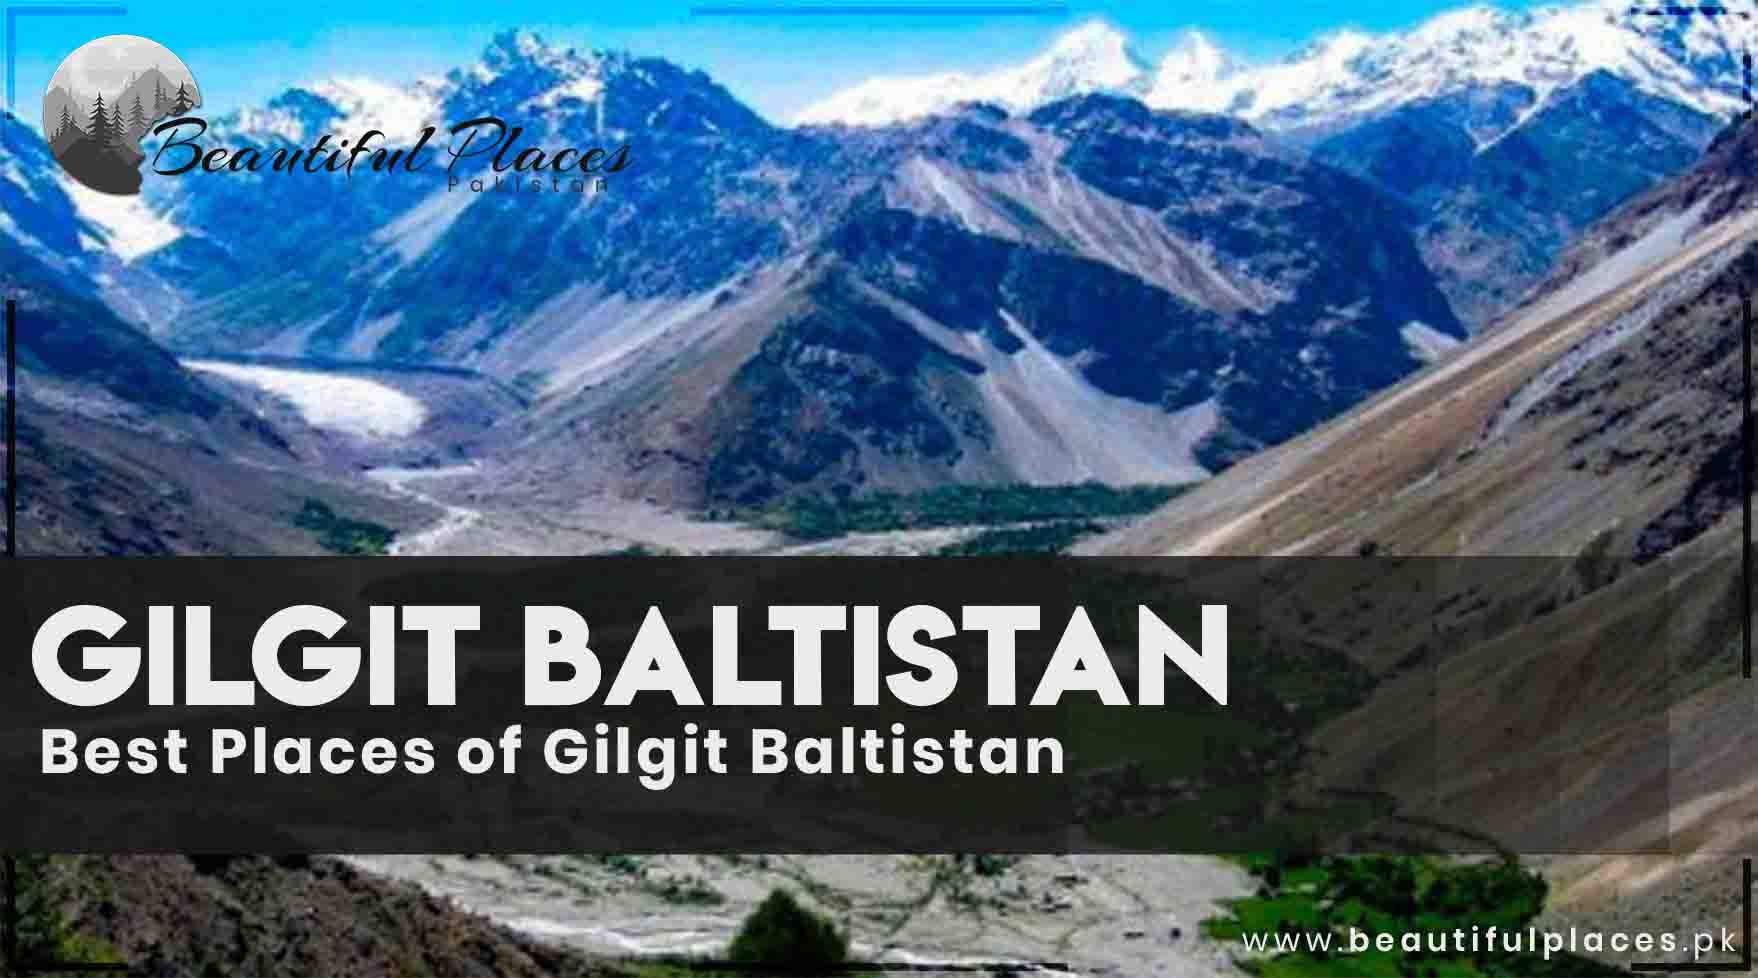 Best Places of Gilgit Baltistan